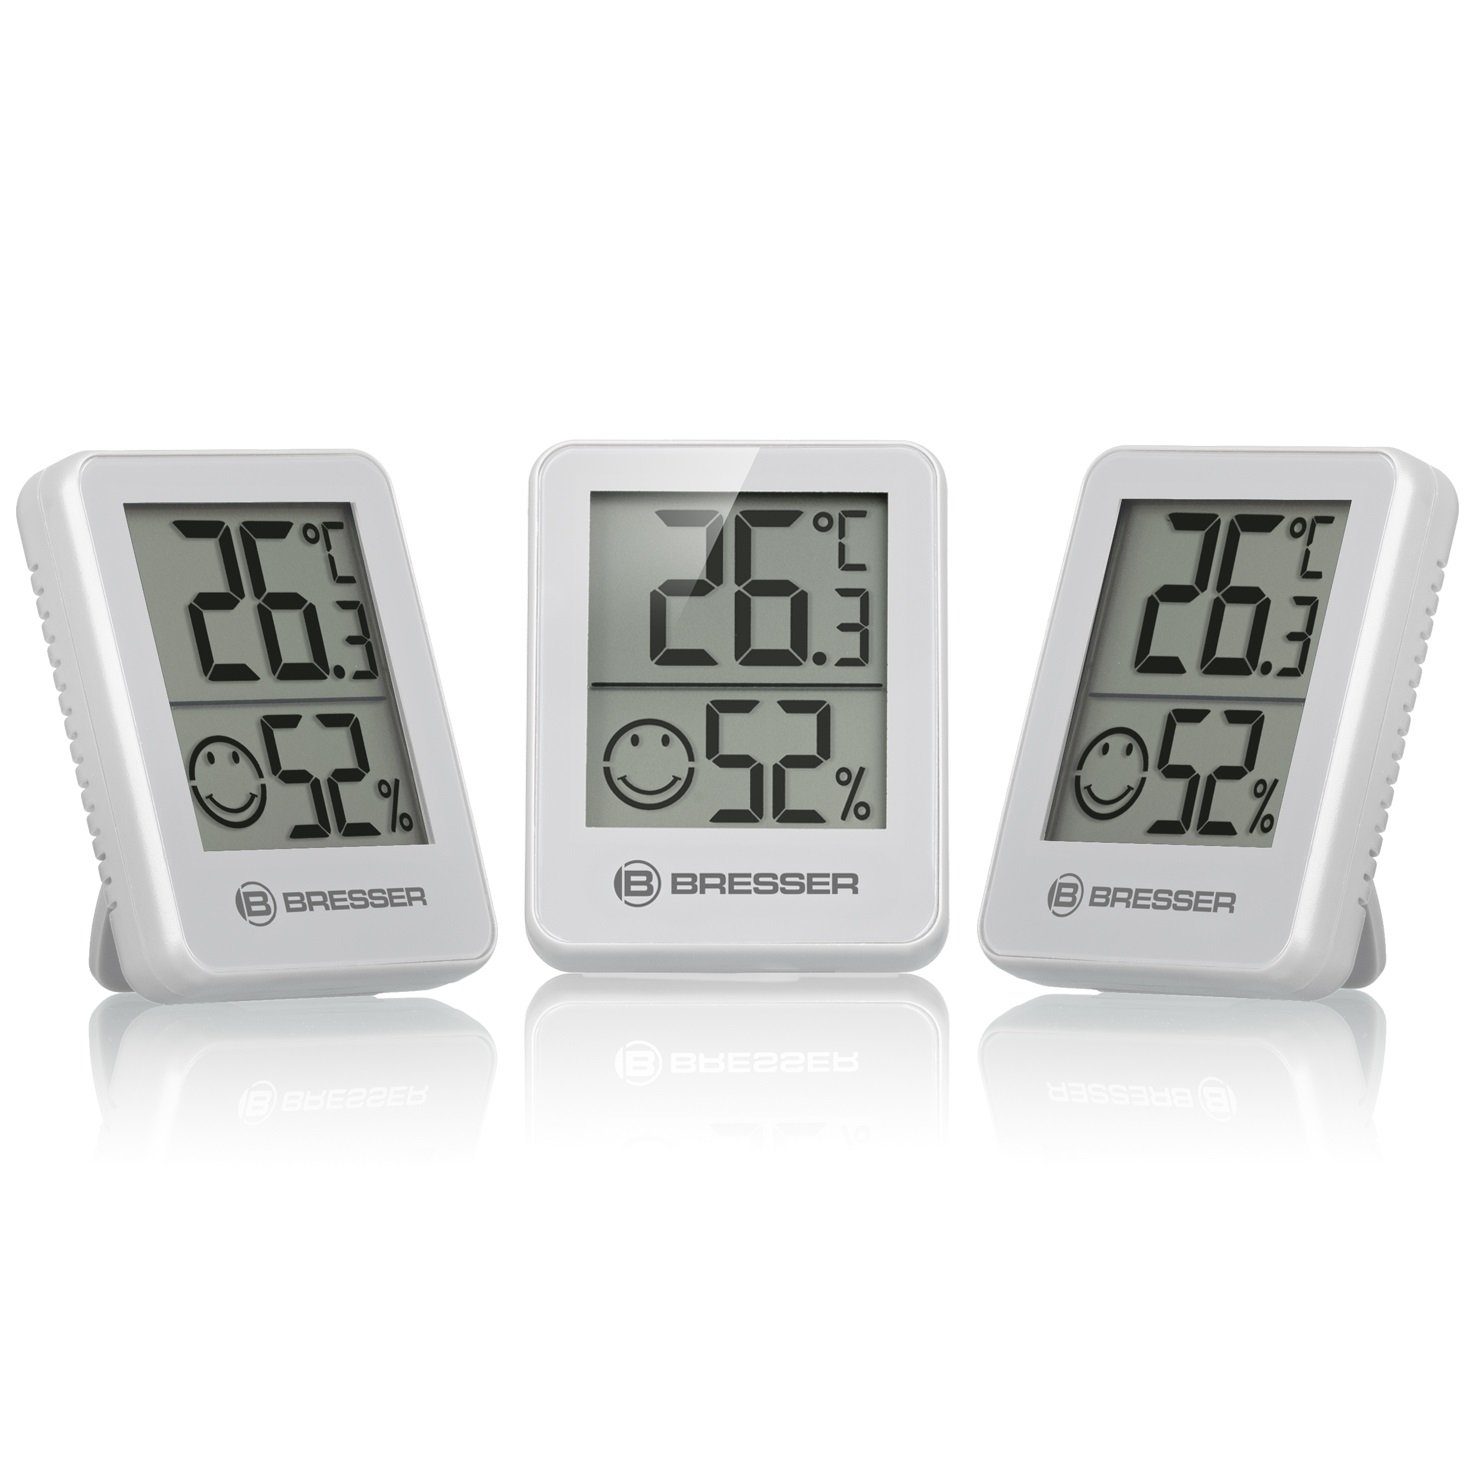 BRESSER Hygrometer Temeo Hygro Indikator 3er Set Thermometer / Temperaturmessgerät weiss